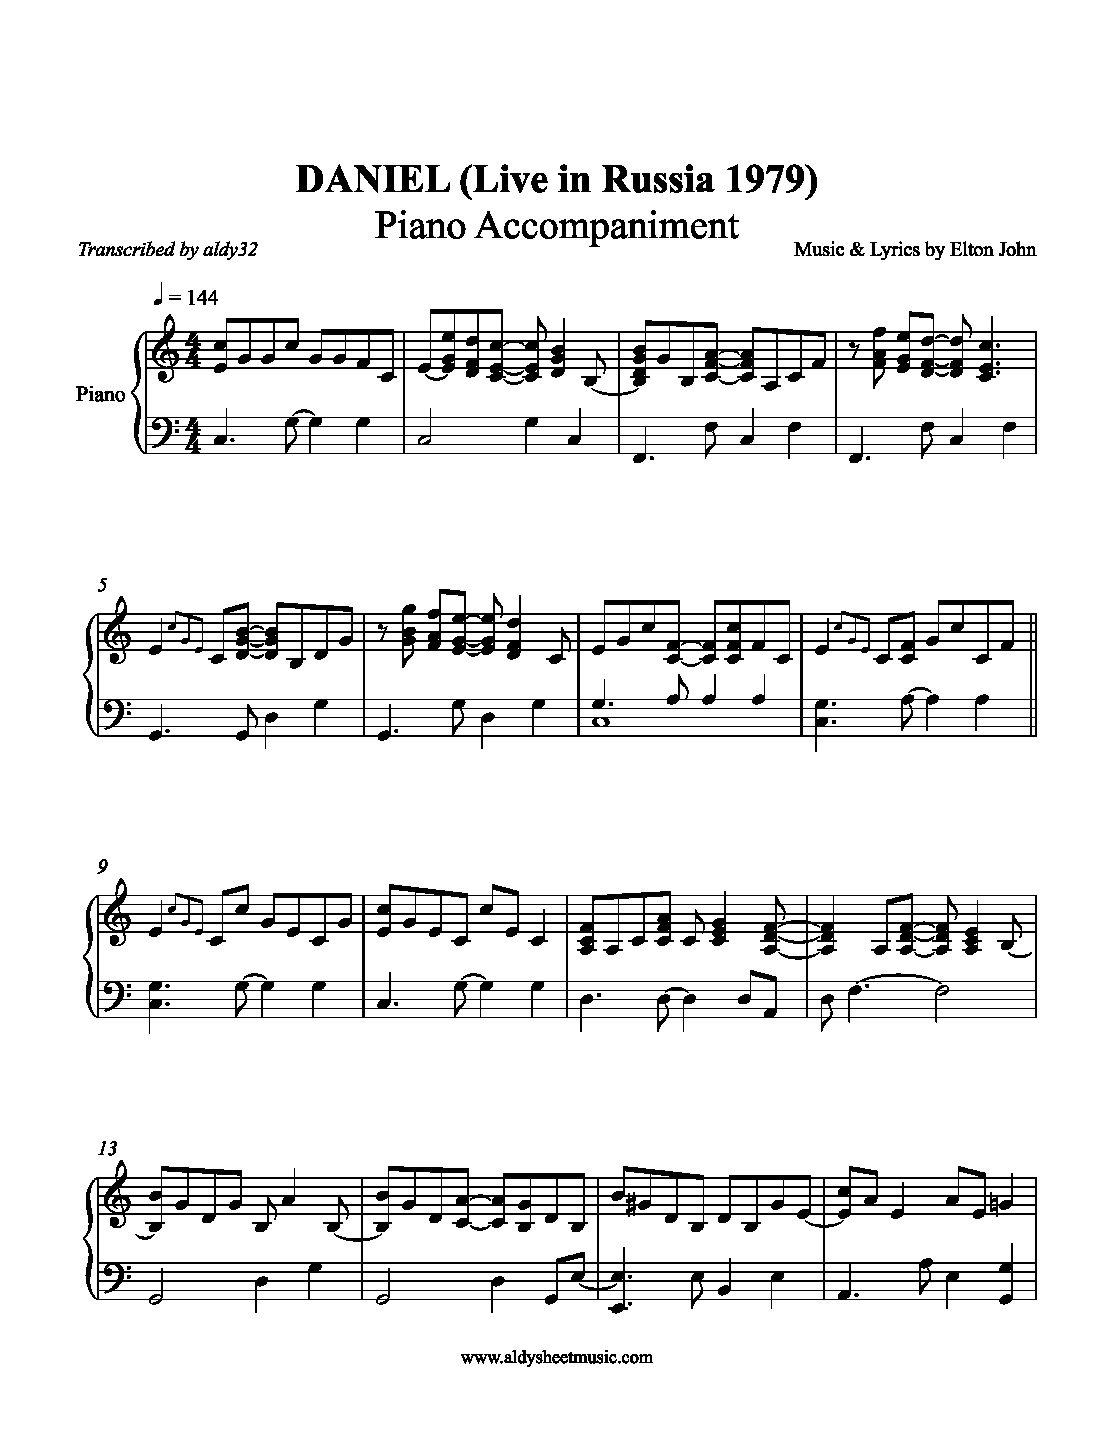 Daniel (Live in Russia 1979) - Elton John (Piano Accompaniment) - Aldy Sheet Music1113 x 1440